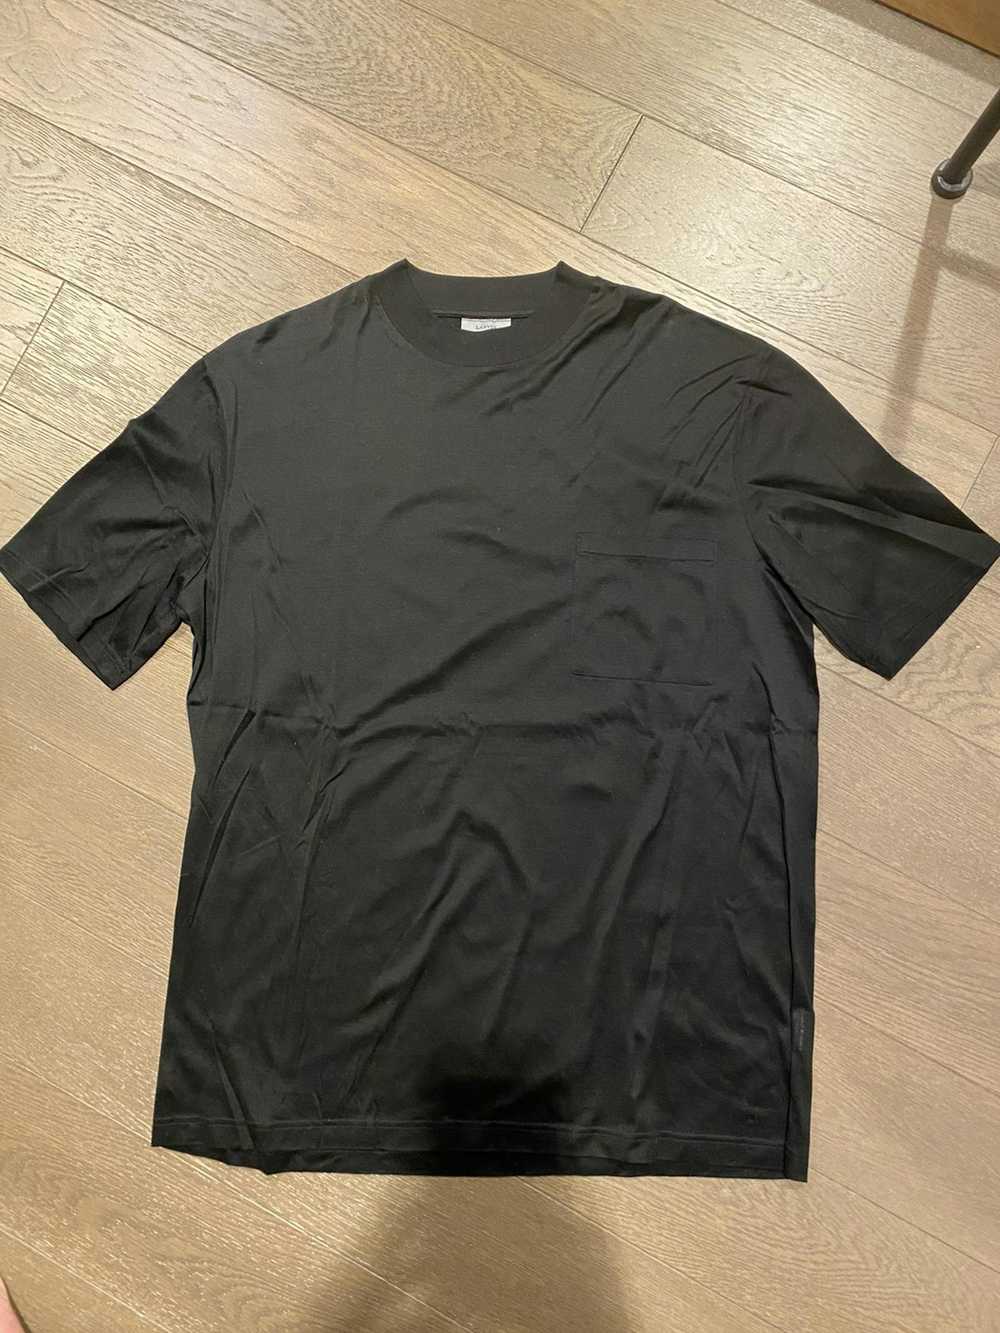 Lanvin Lanvin Black SS Tshirt - image 1